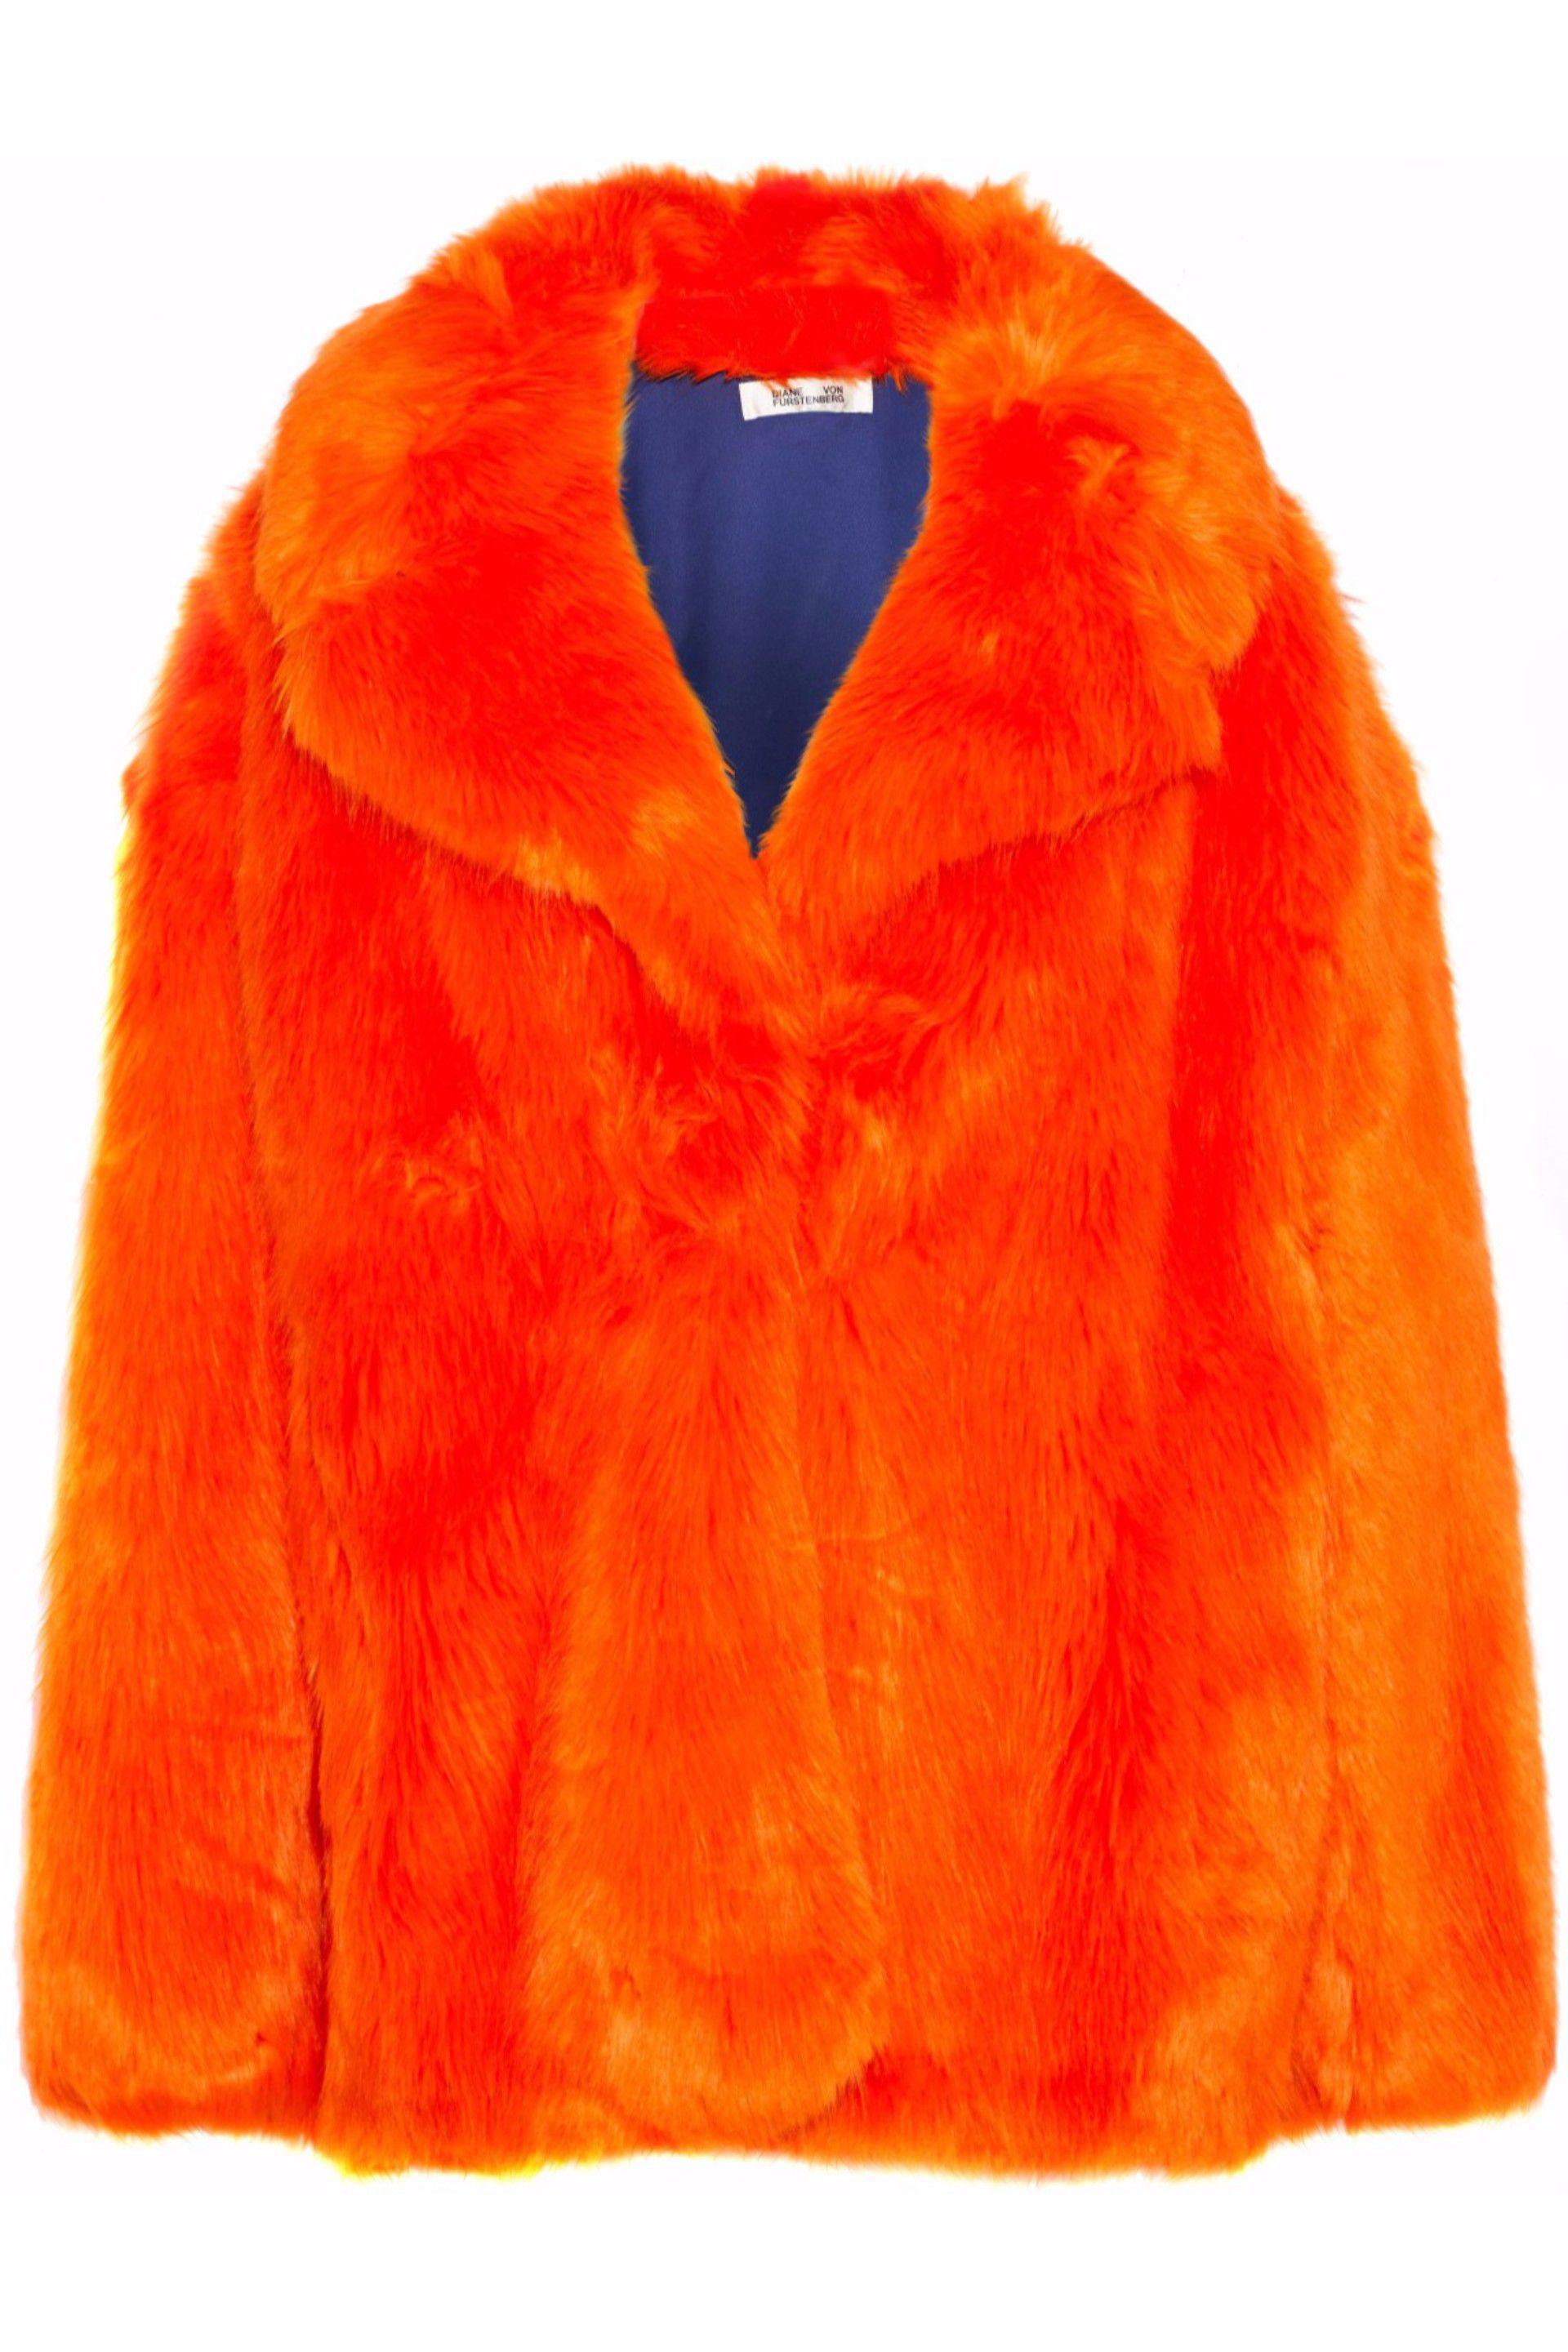 Diane von Furstenberg Faux Fur Coat in Orange | Lyst UK